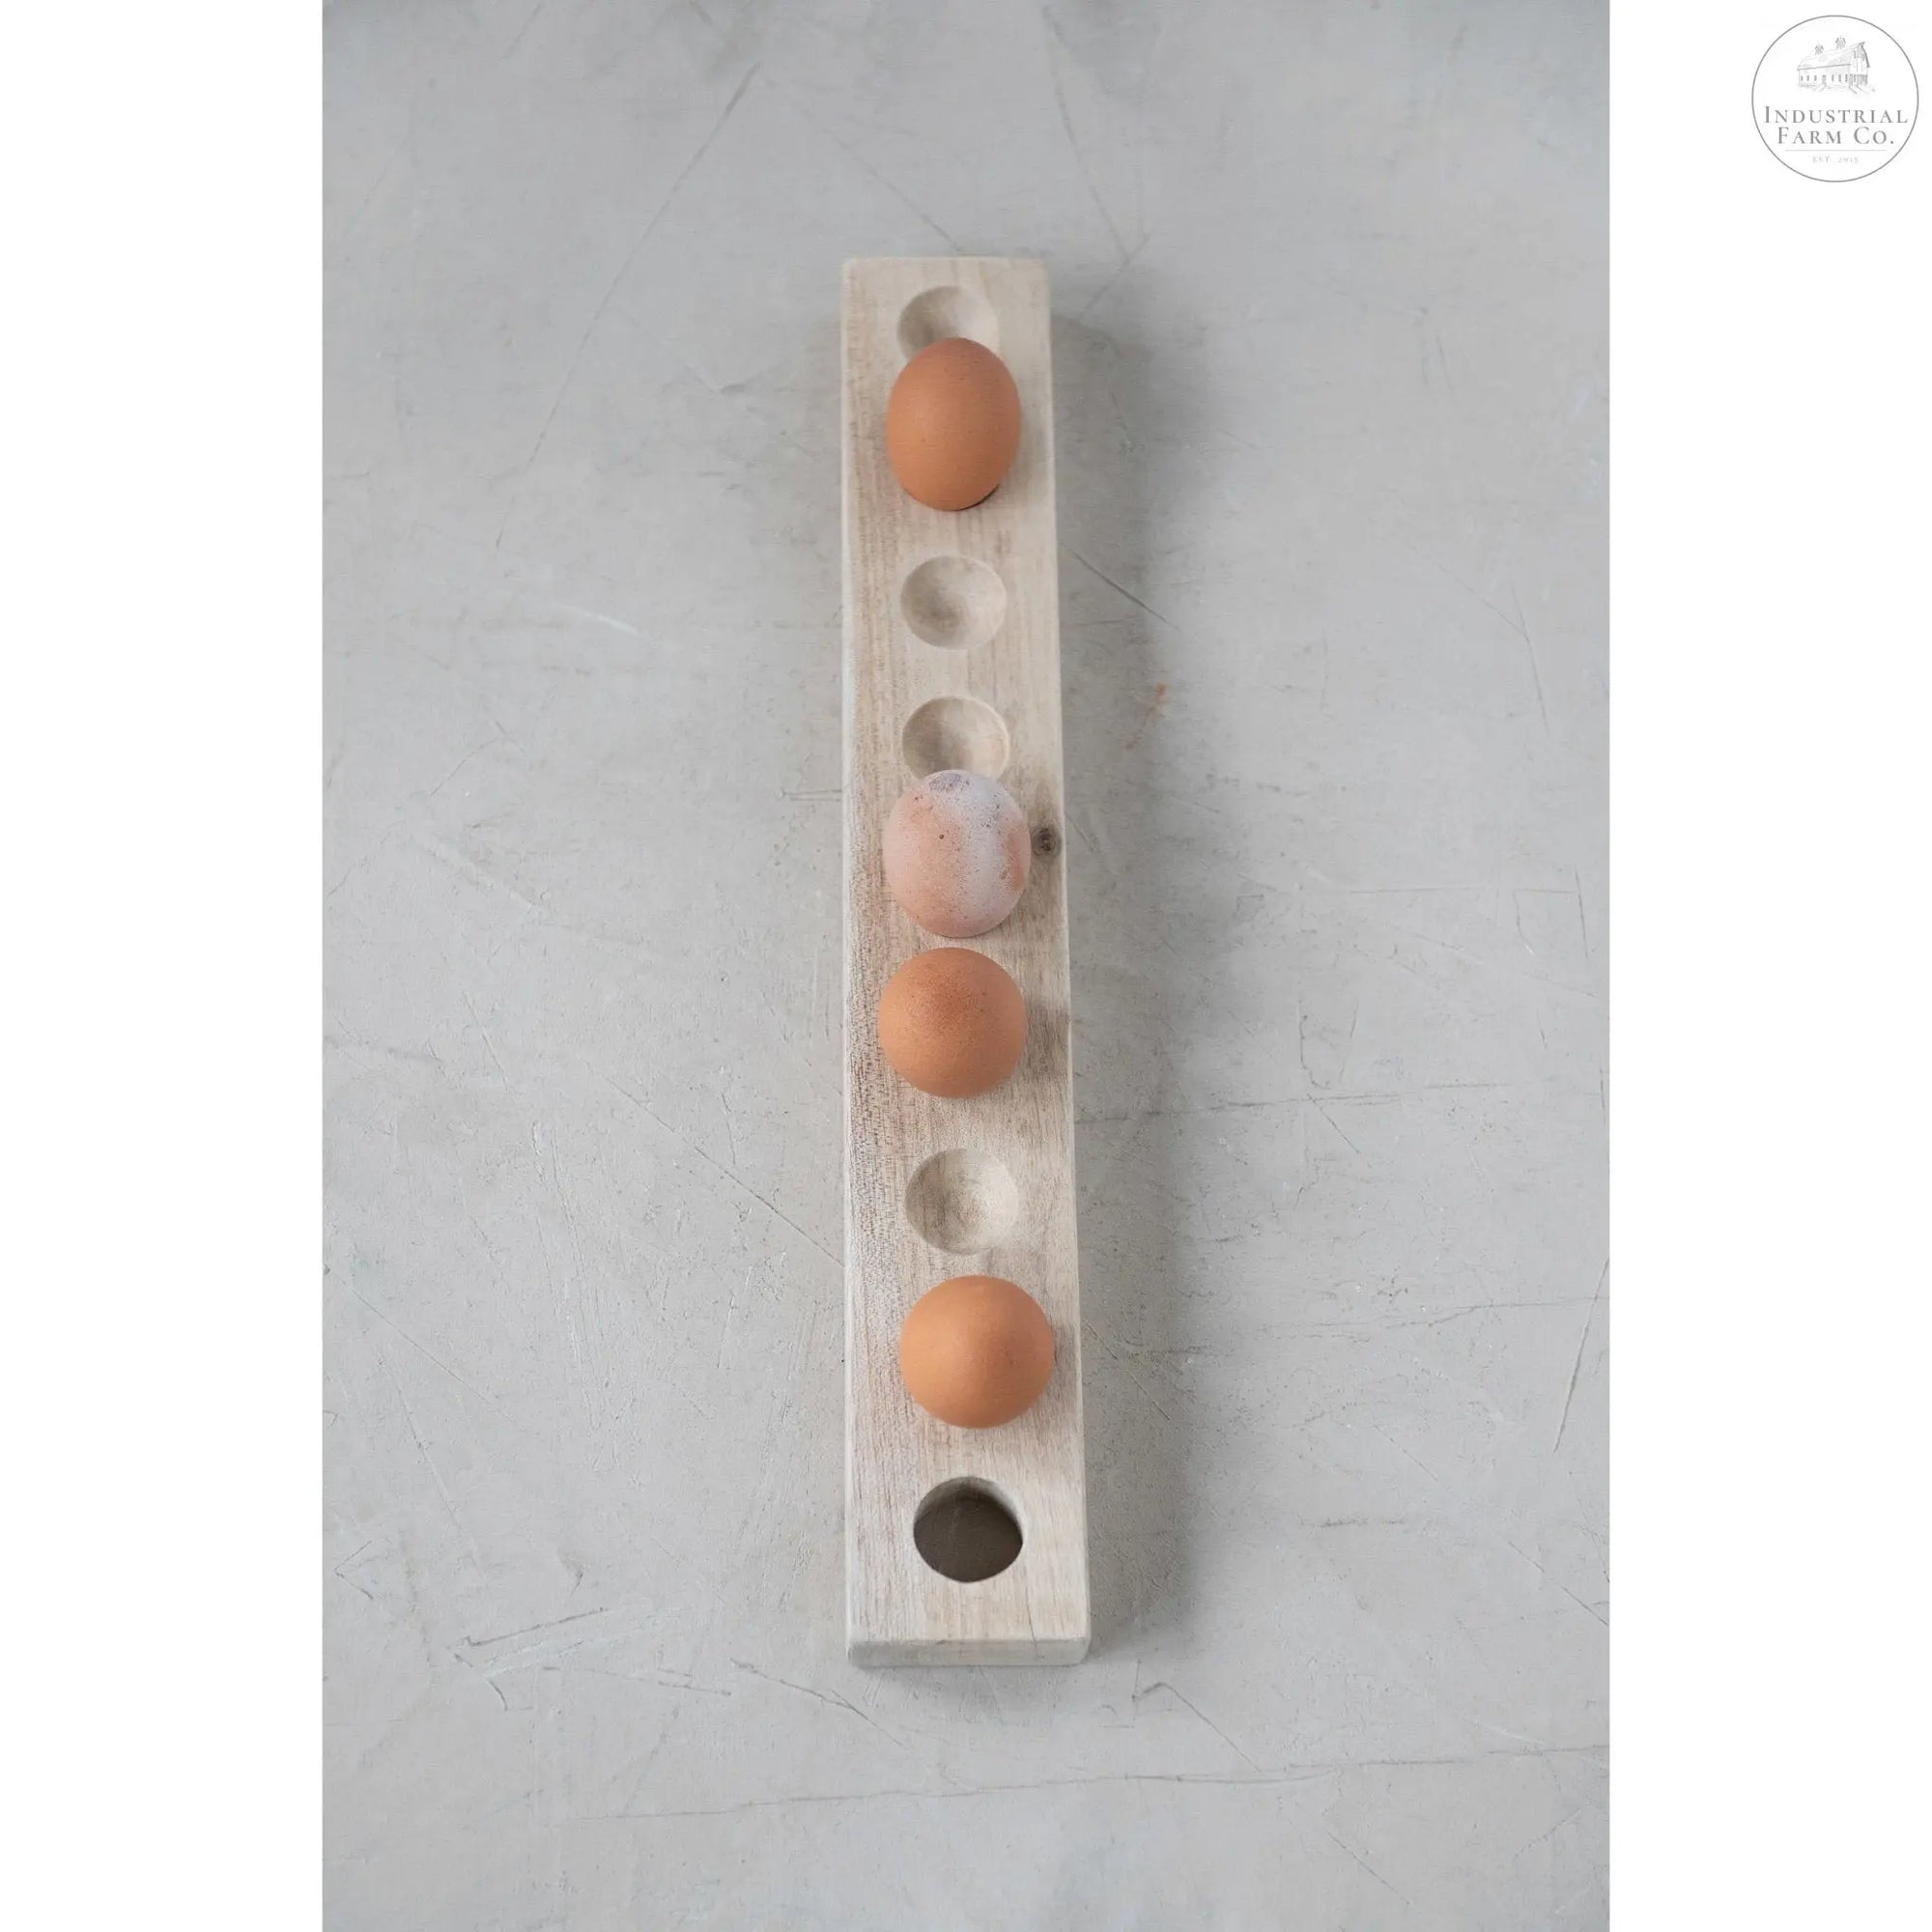 Unique Mango Wood Egg Holder     | Industrial Farm Co